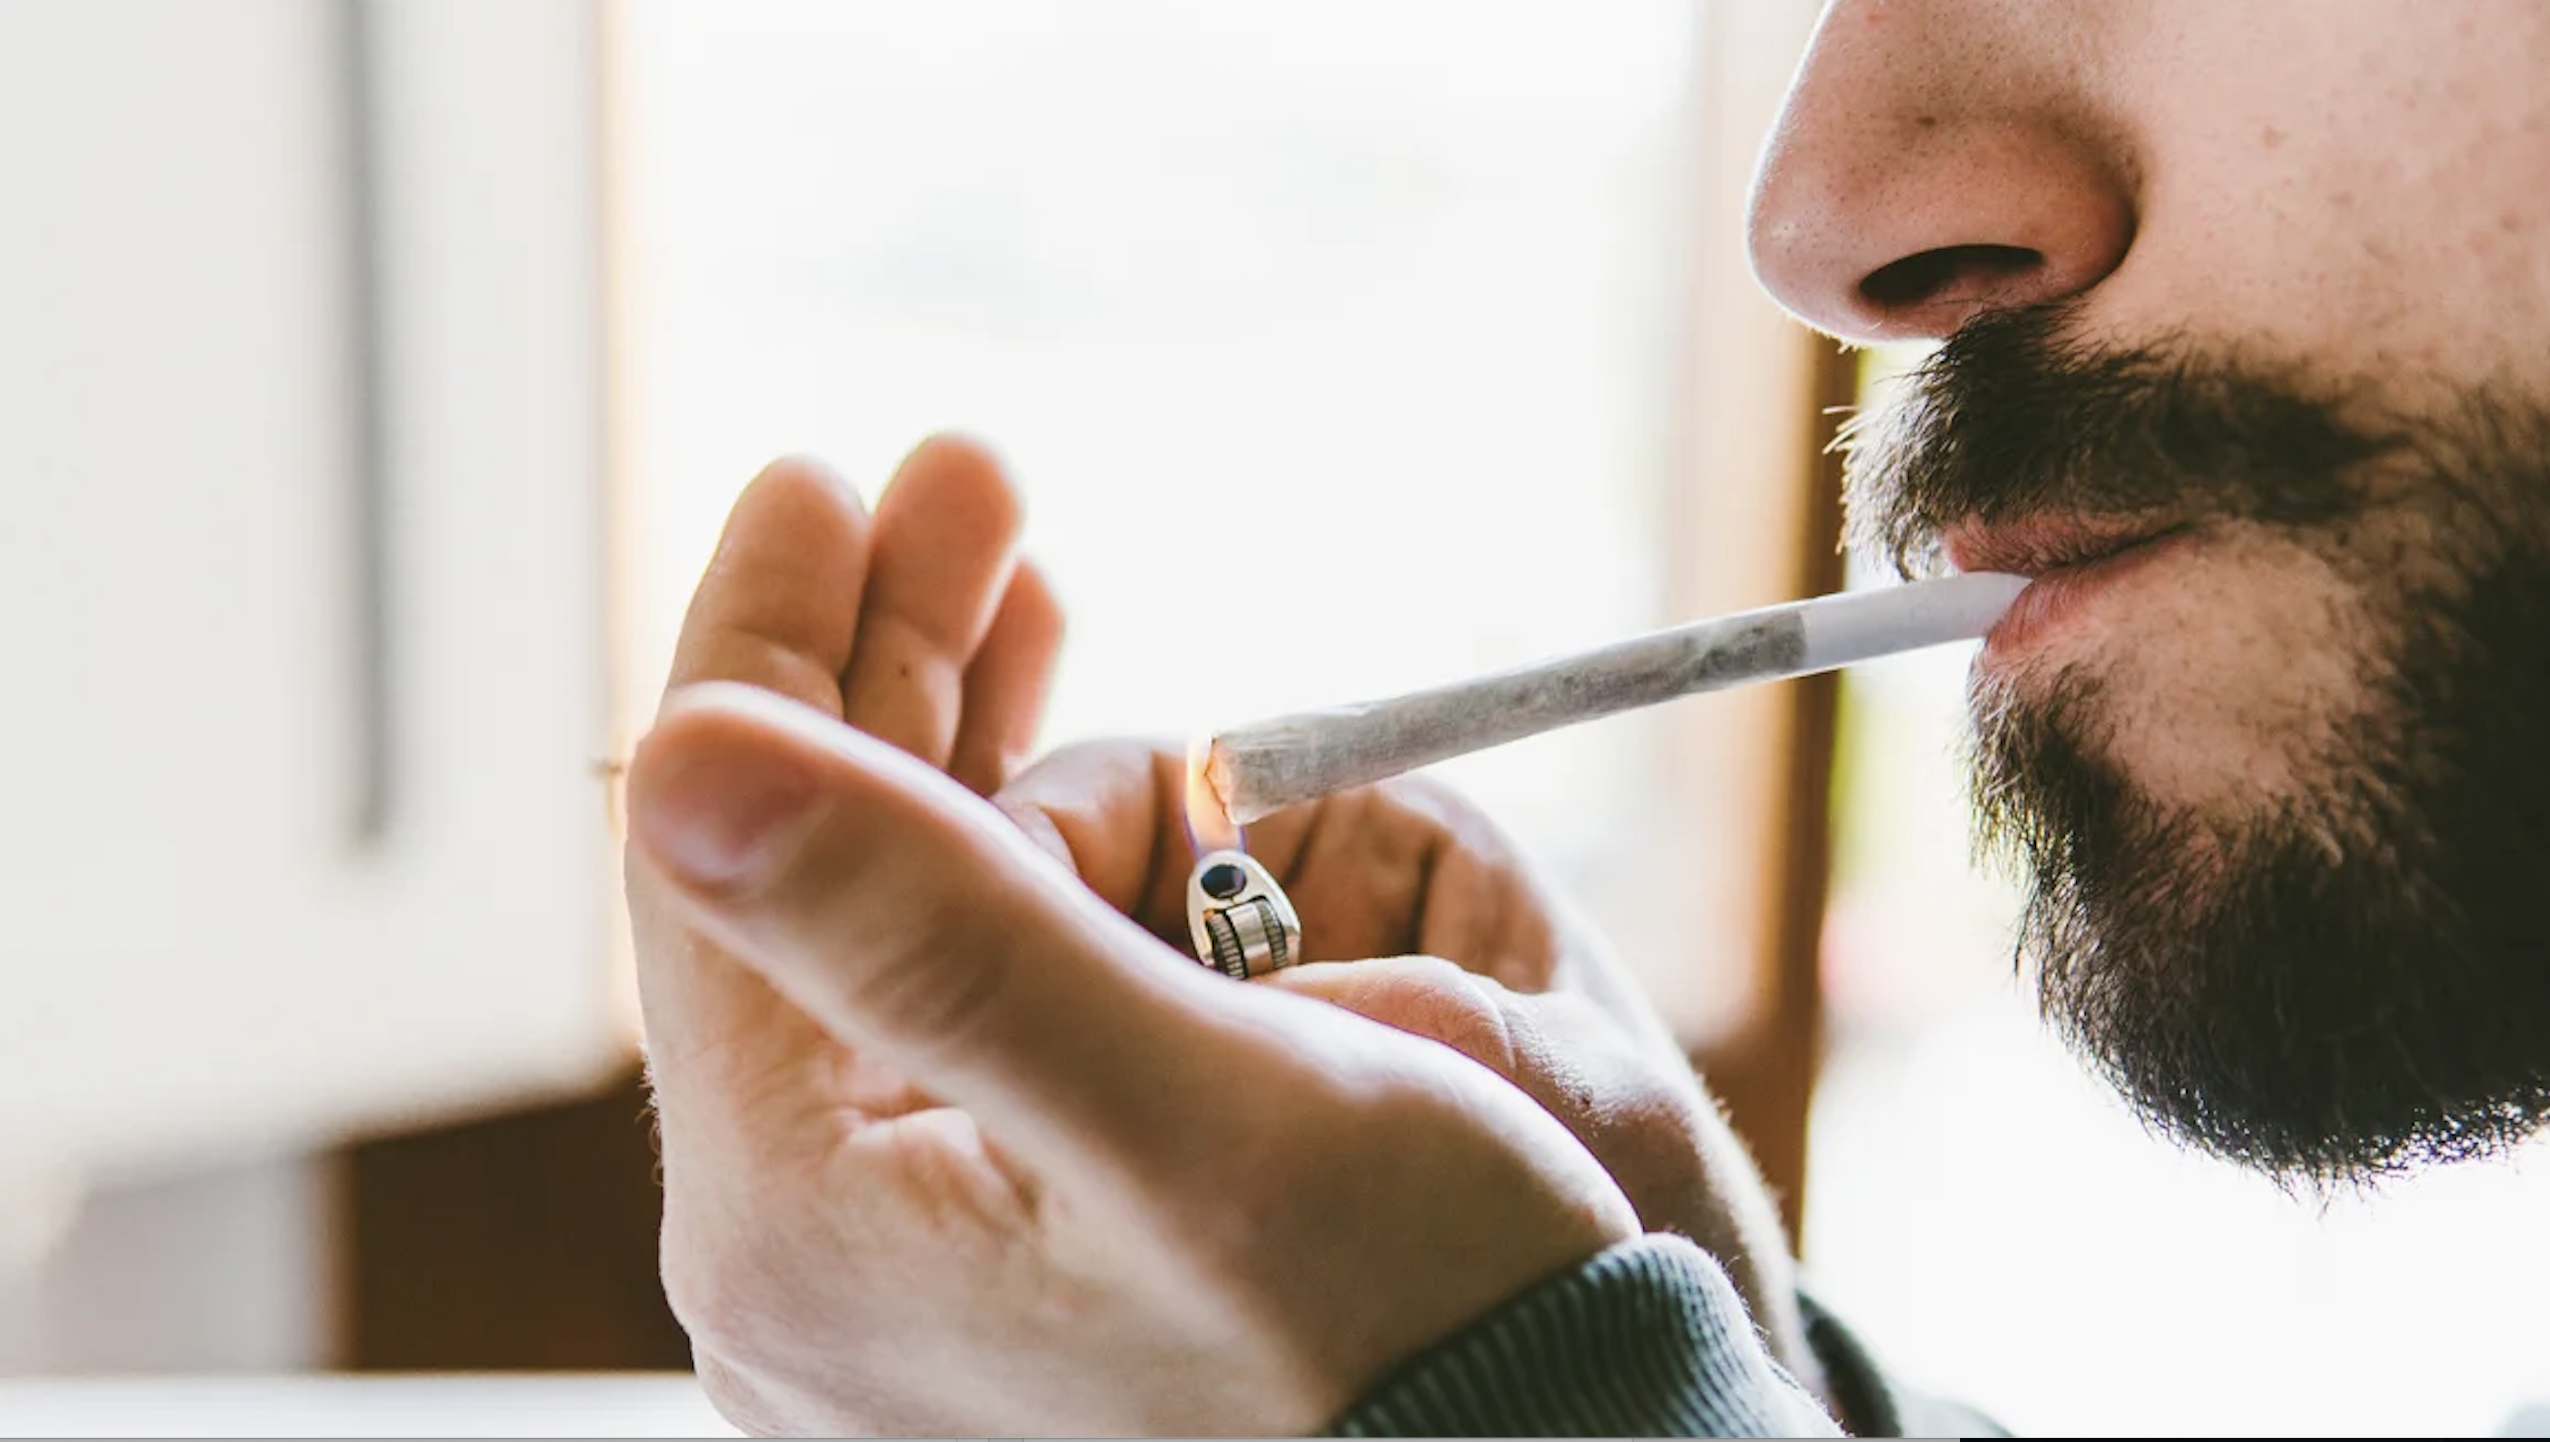 Man lighting a joint